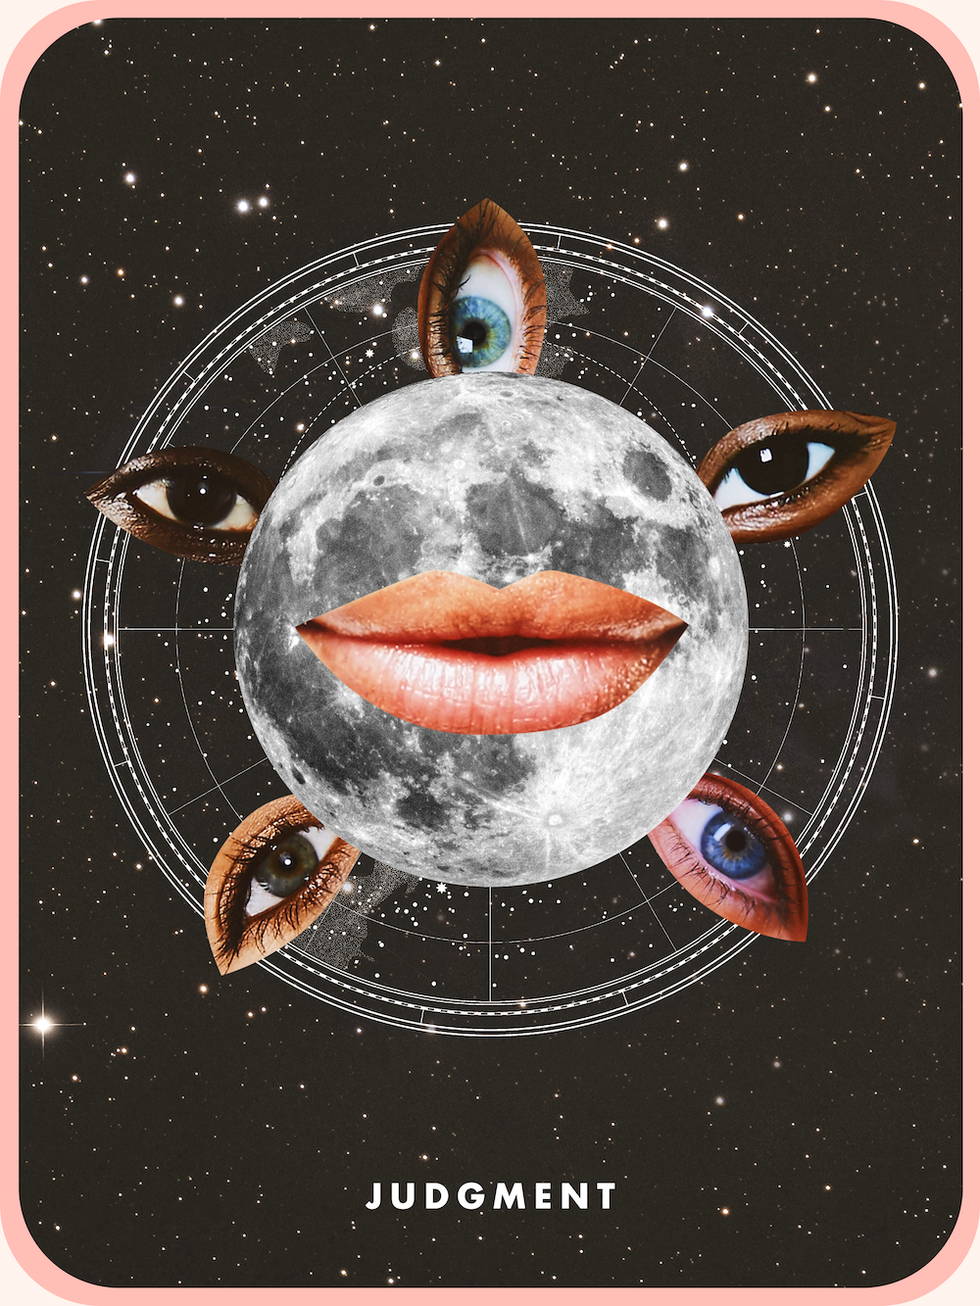 the judgment tarot card showing eyes encircling a full moon